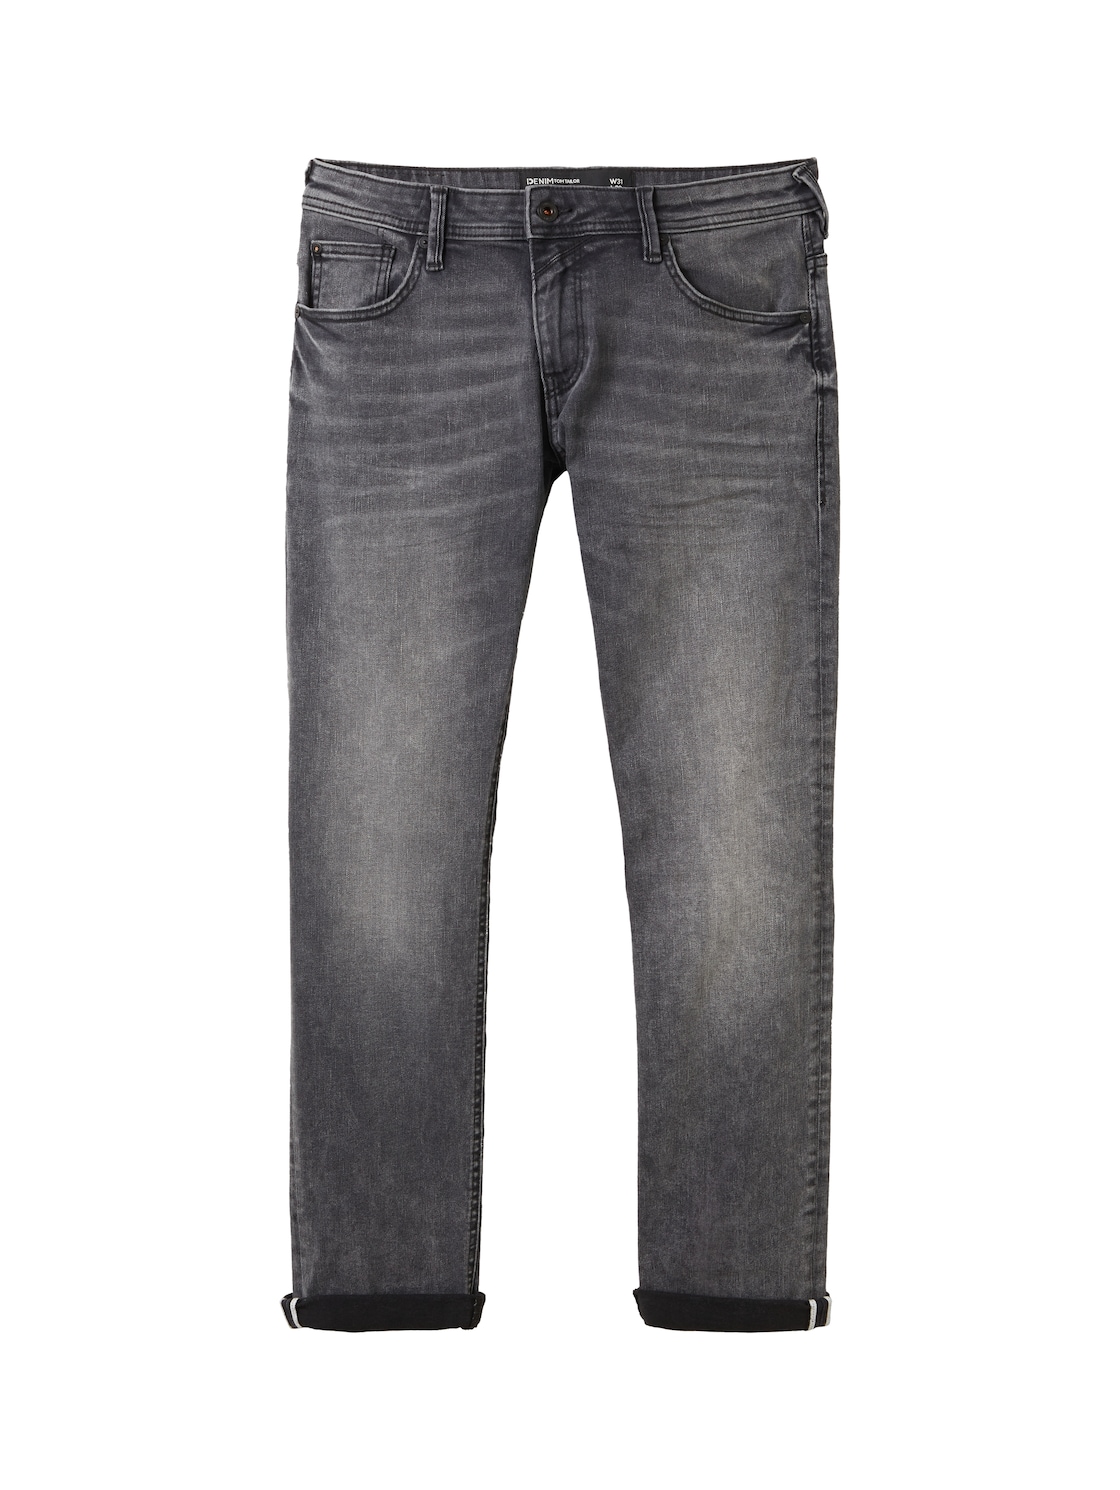 TOM TAILOR DENIM Herren Aedan Straight Jeans, grau, Uni, Gr. 28/32 von Tom Tailor Denim